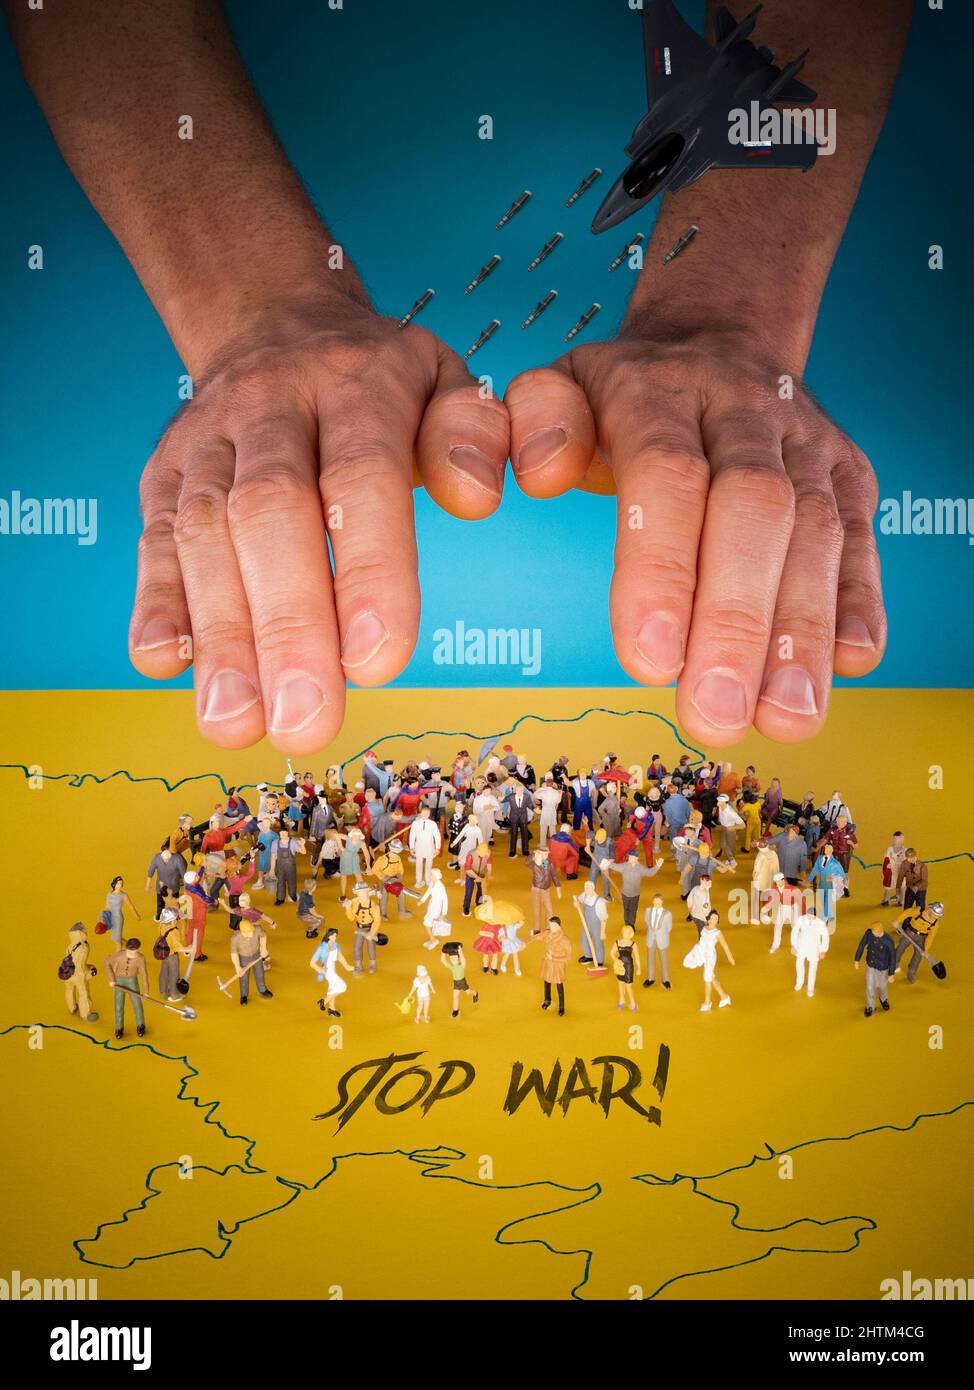 Stop War on the Ukraine. Ukraine flag and Ukrainian people concept. Pray For Ukraine peace. Save Ukraine from Russia and from Russian attack. Protect Stock Photo